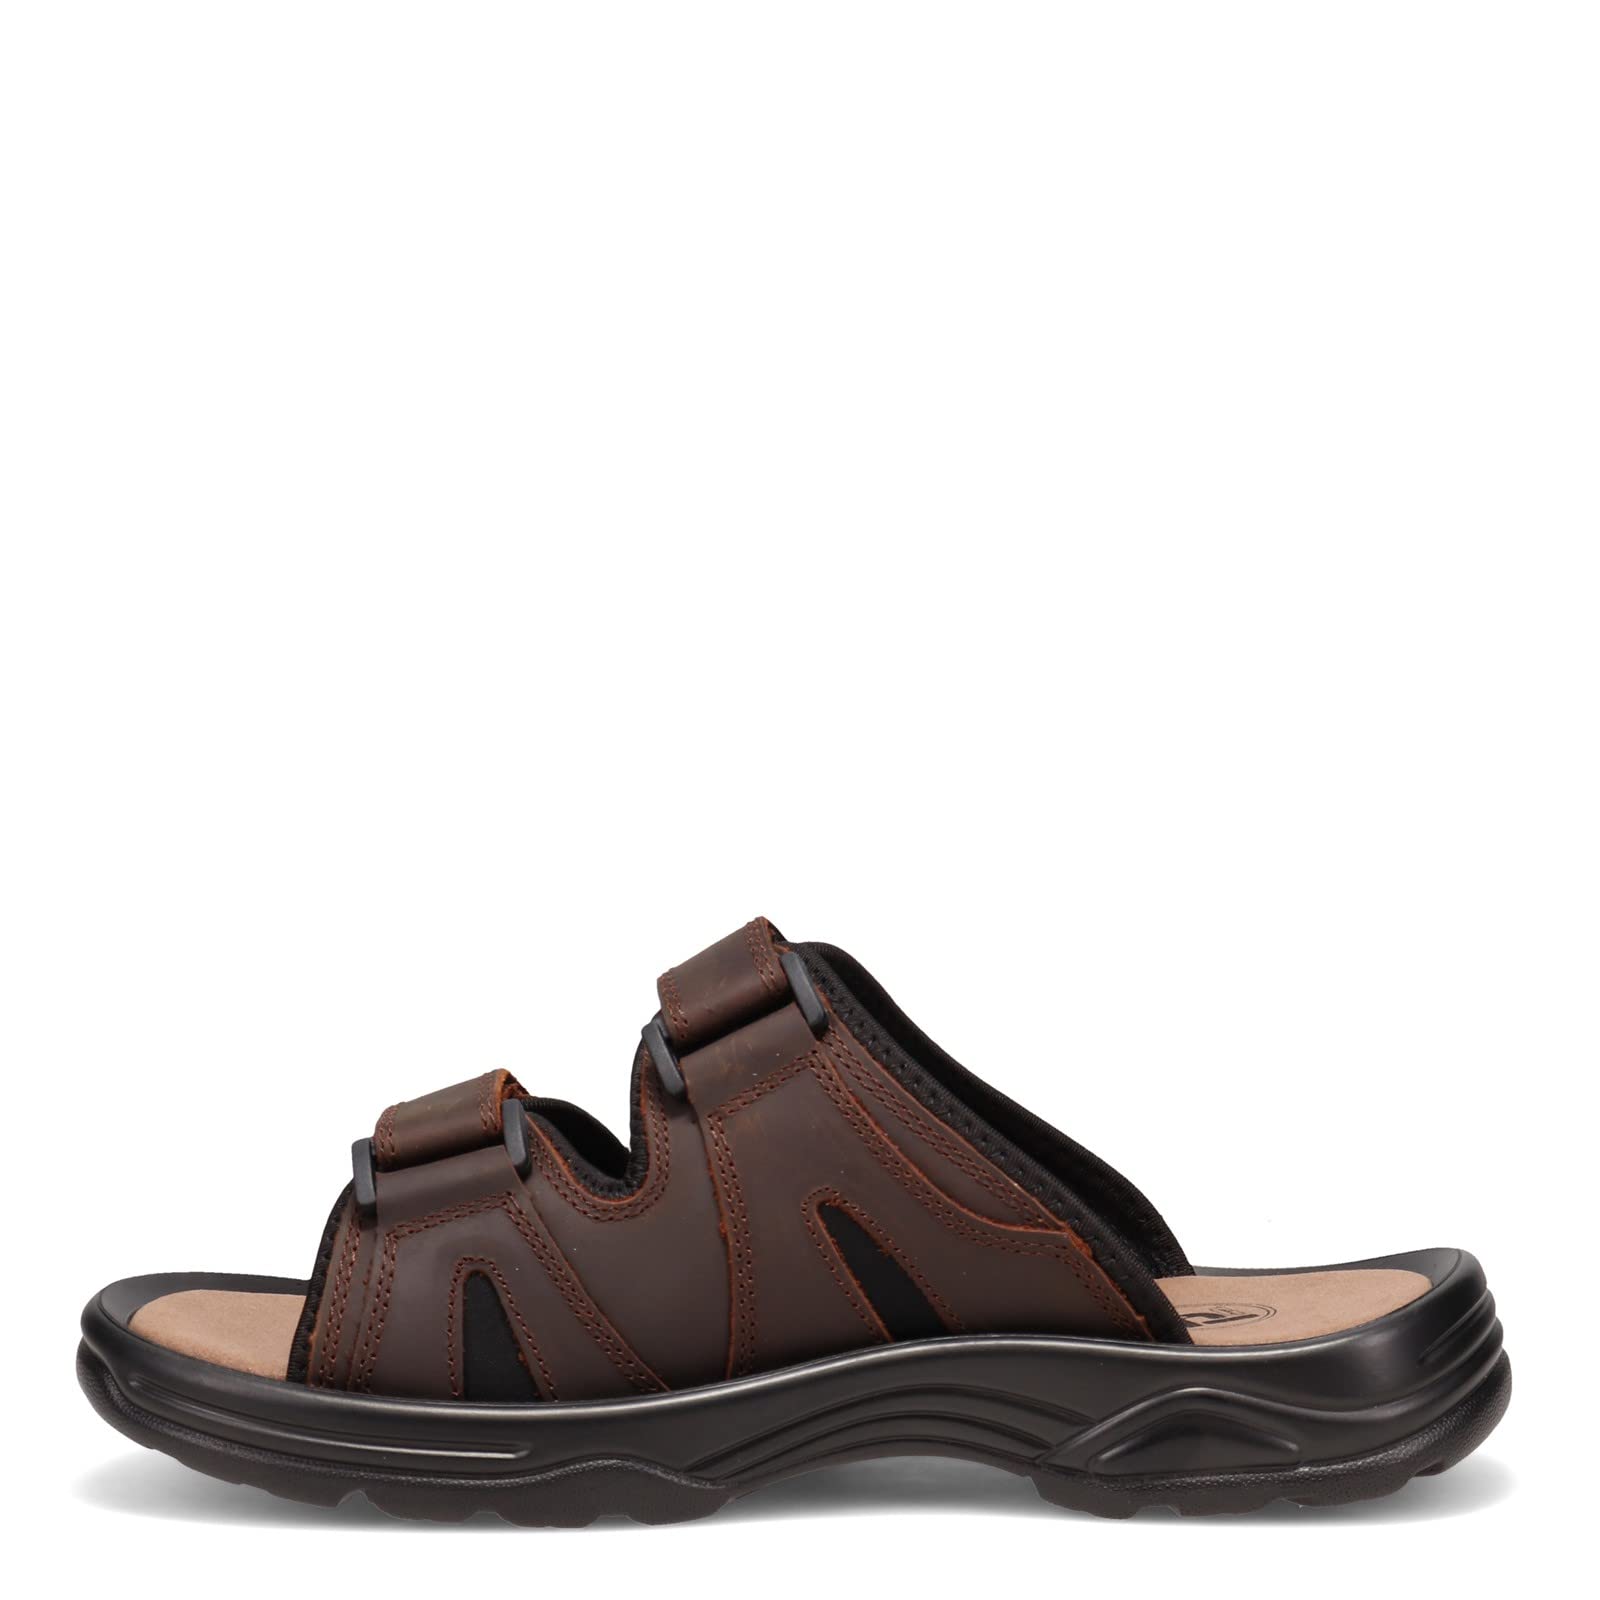 Propet Mens Vero Slide Athletic Sandals Casual - Brown